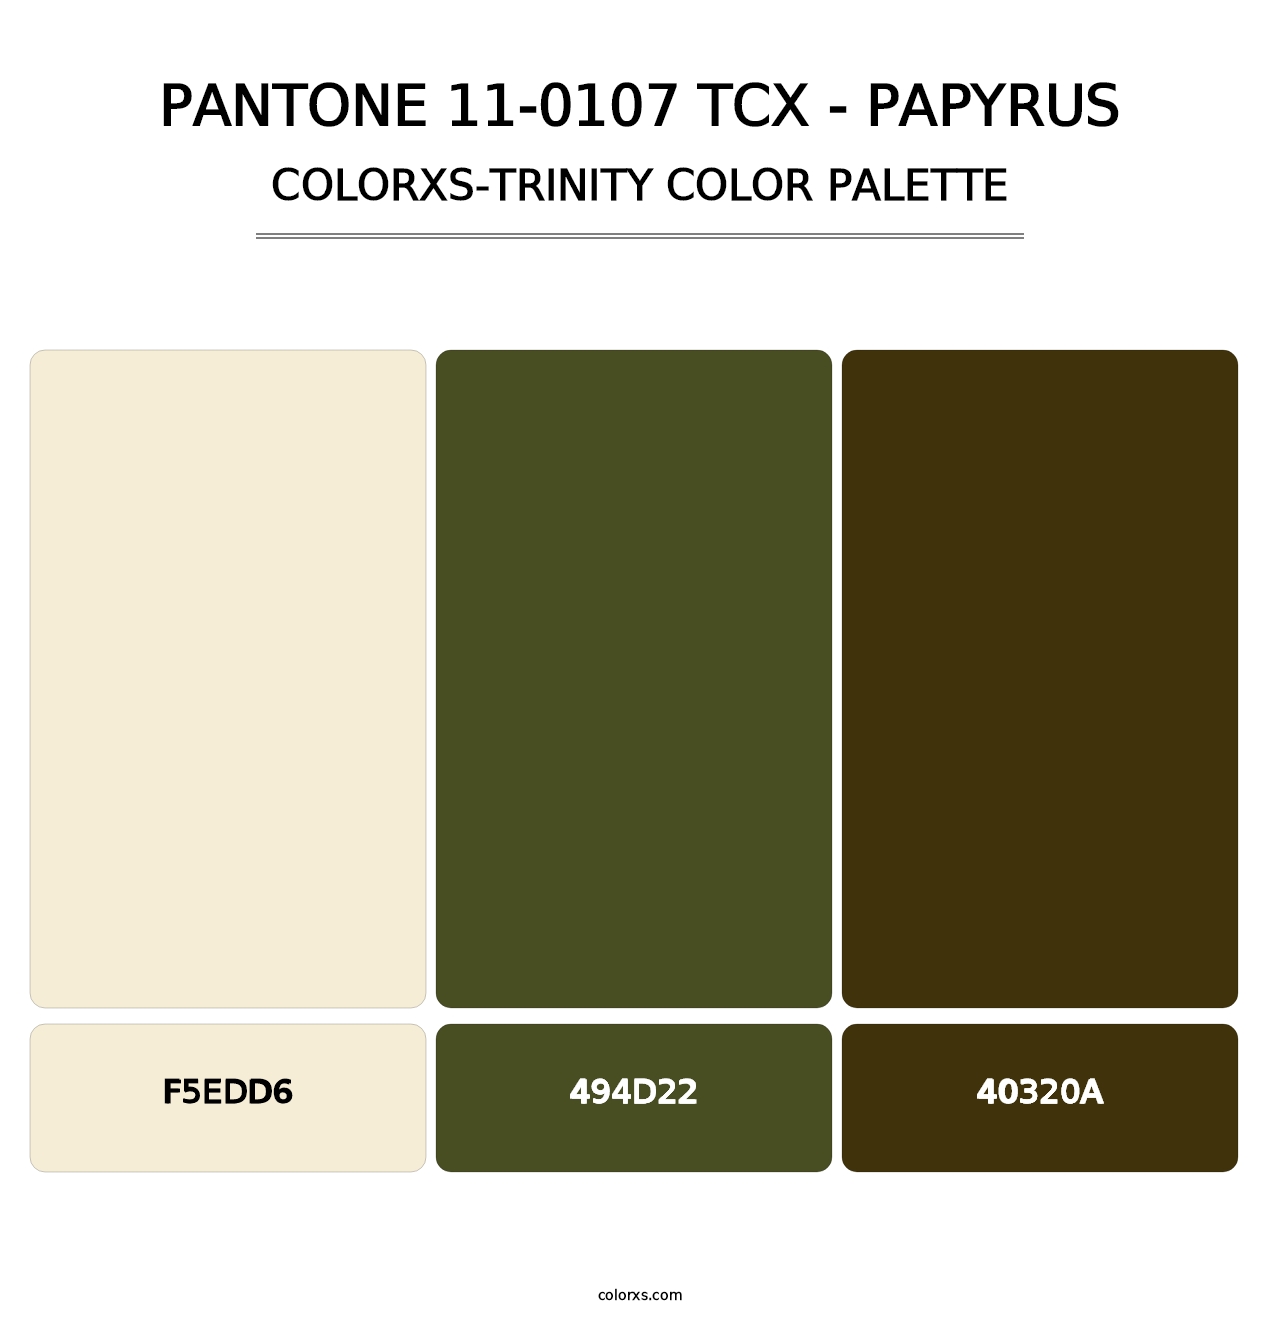 PANTONE 11-0107 TCX - Papyrus - Colorxs Trinity Palette